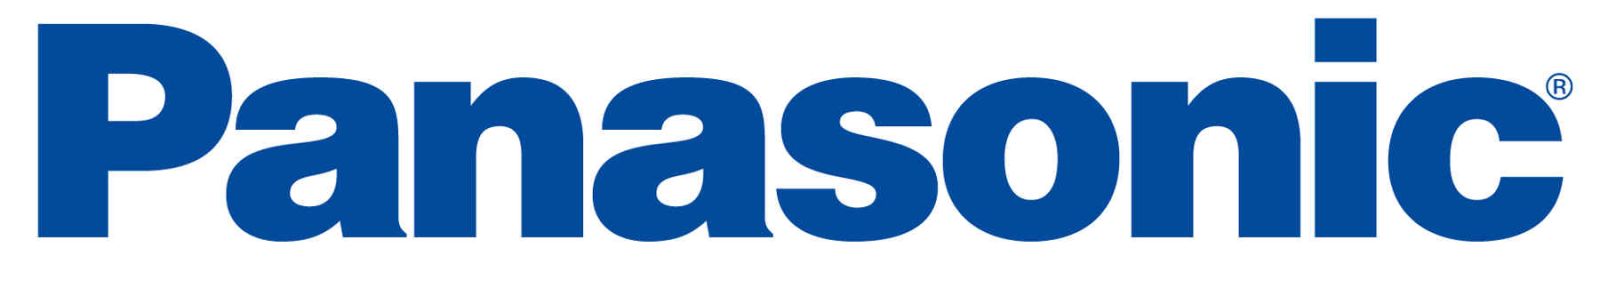 Bostancı  Panasonic TV logo